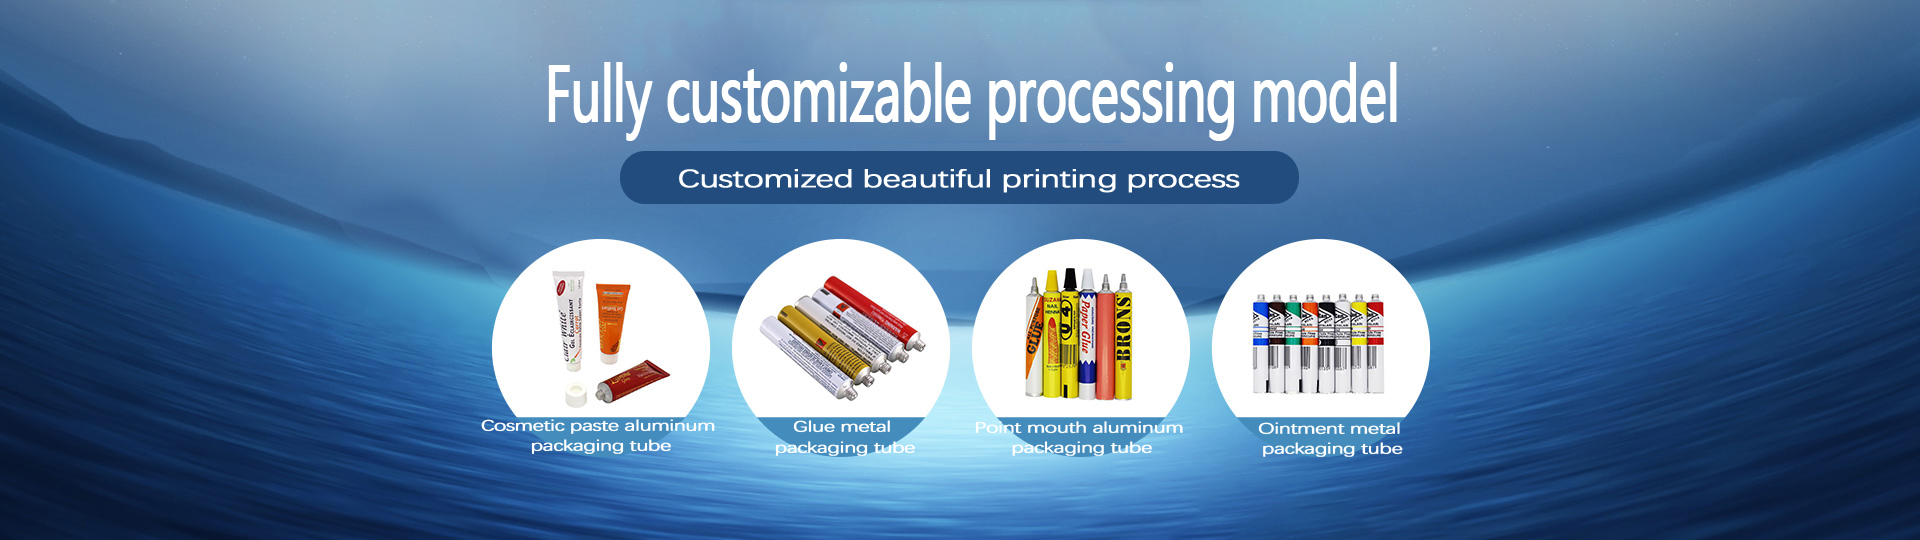 Ziyang: Fully customizable processing model